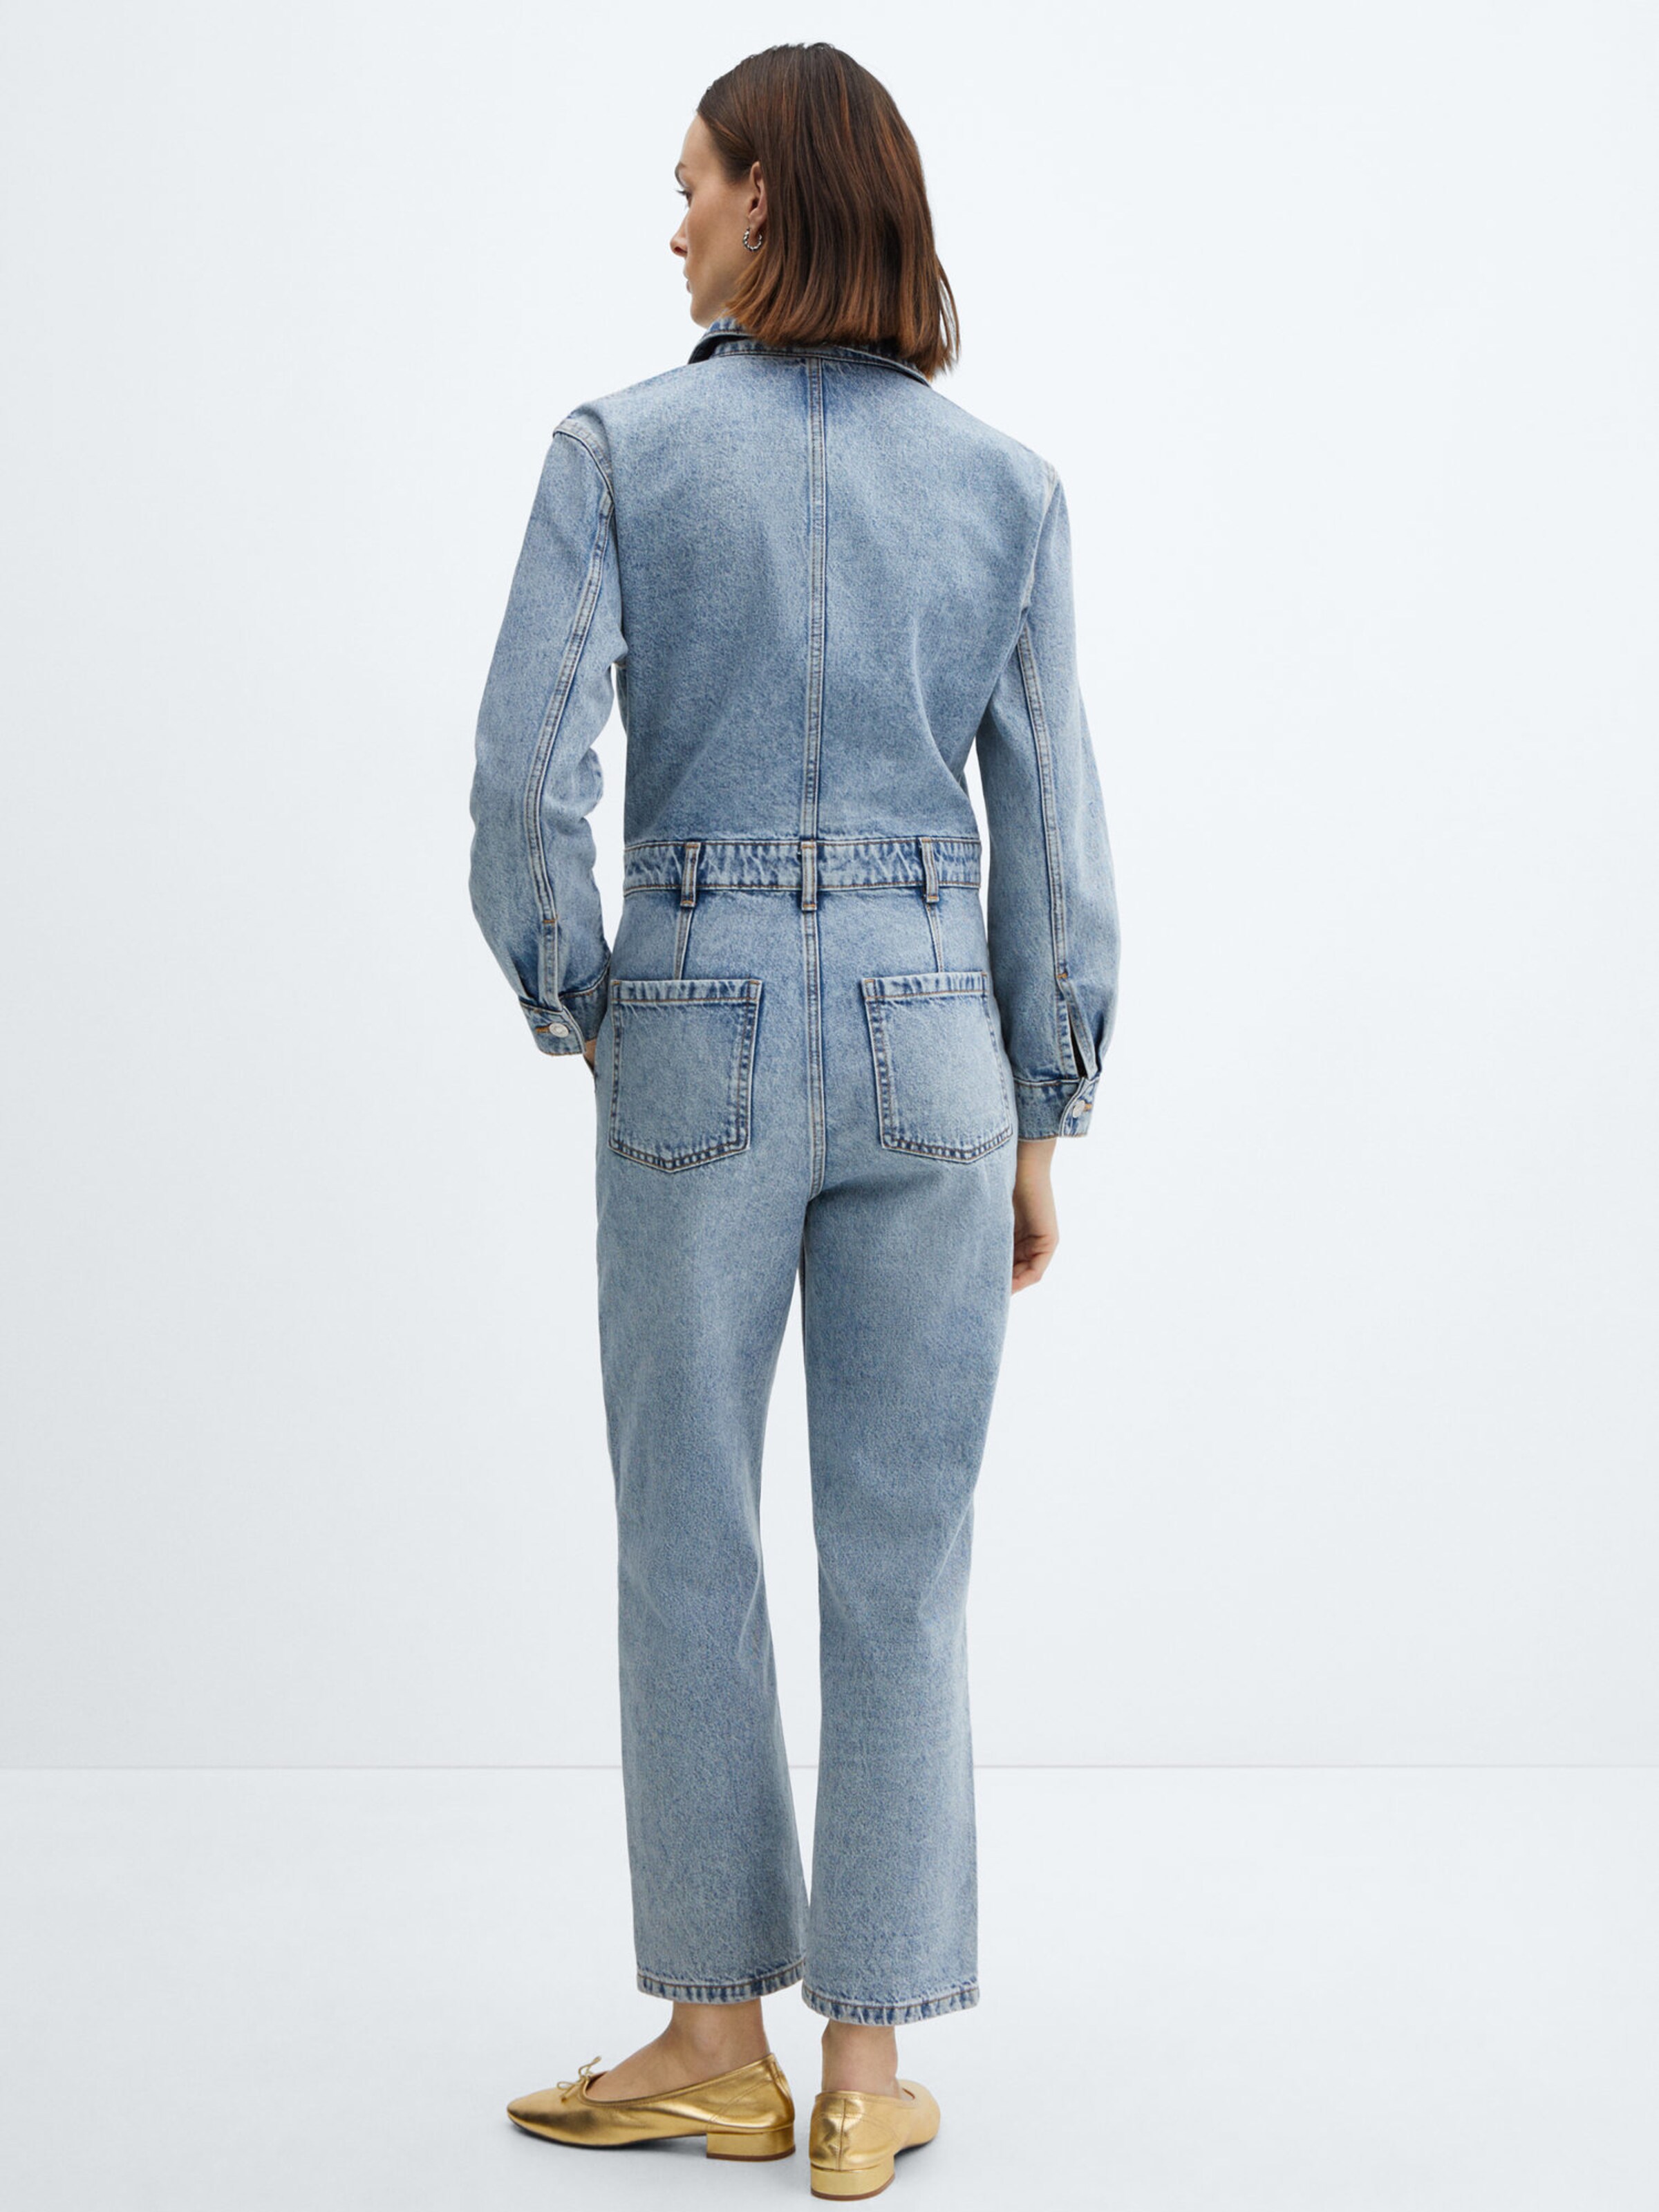 MANGO WOMEN'S LONG Sleeve Denim Zip Jumpsuit in Bleach Blue Size Small  $50.70 - PicClick